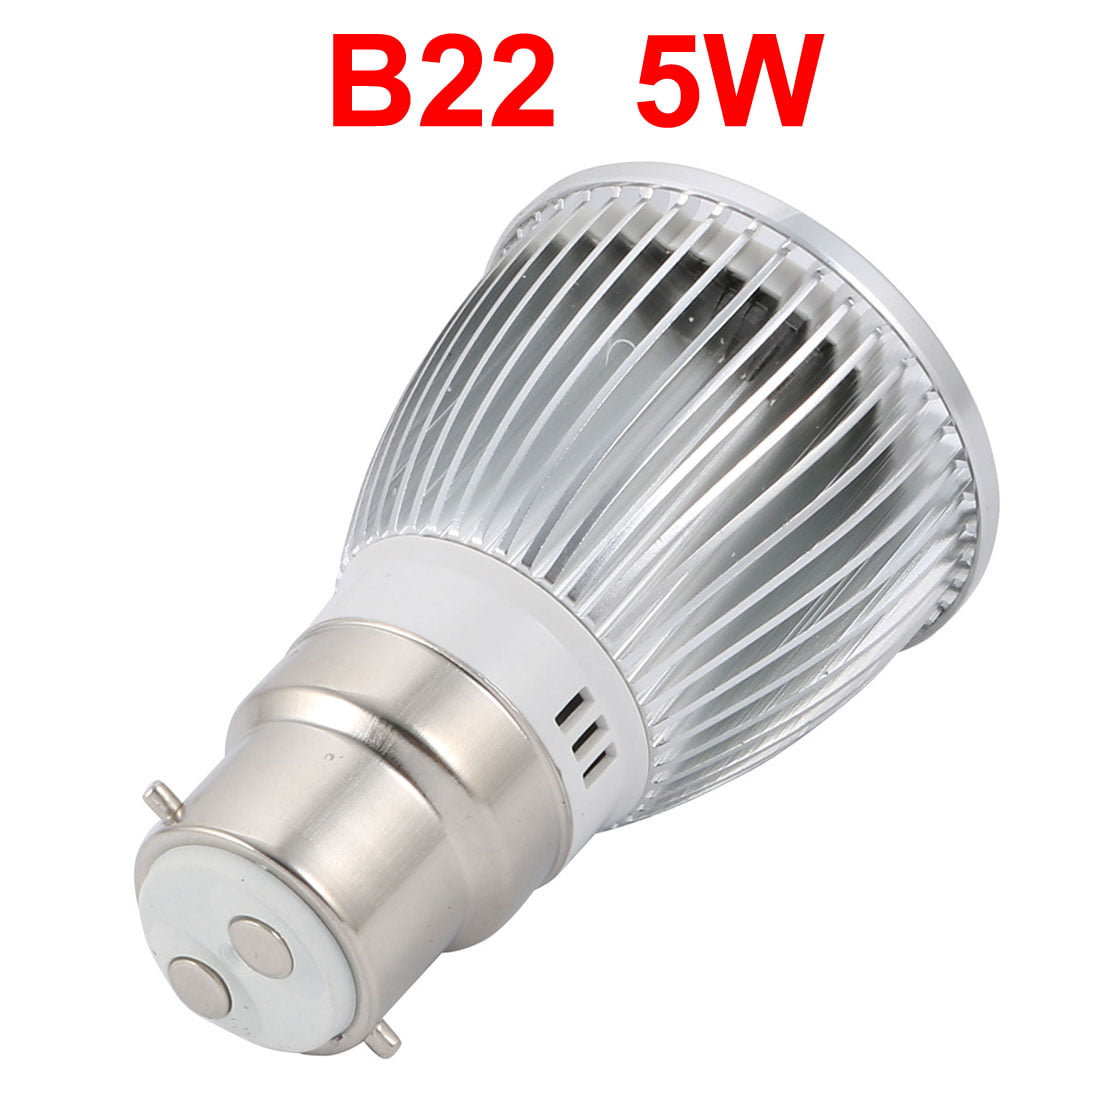 2pcs B22 5W Aluminum Alloy COB Light Housing Reflector Lamp Bulb Shell